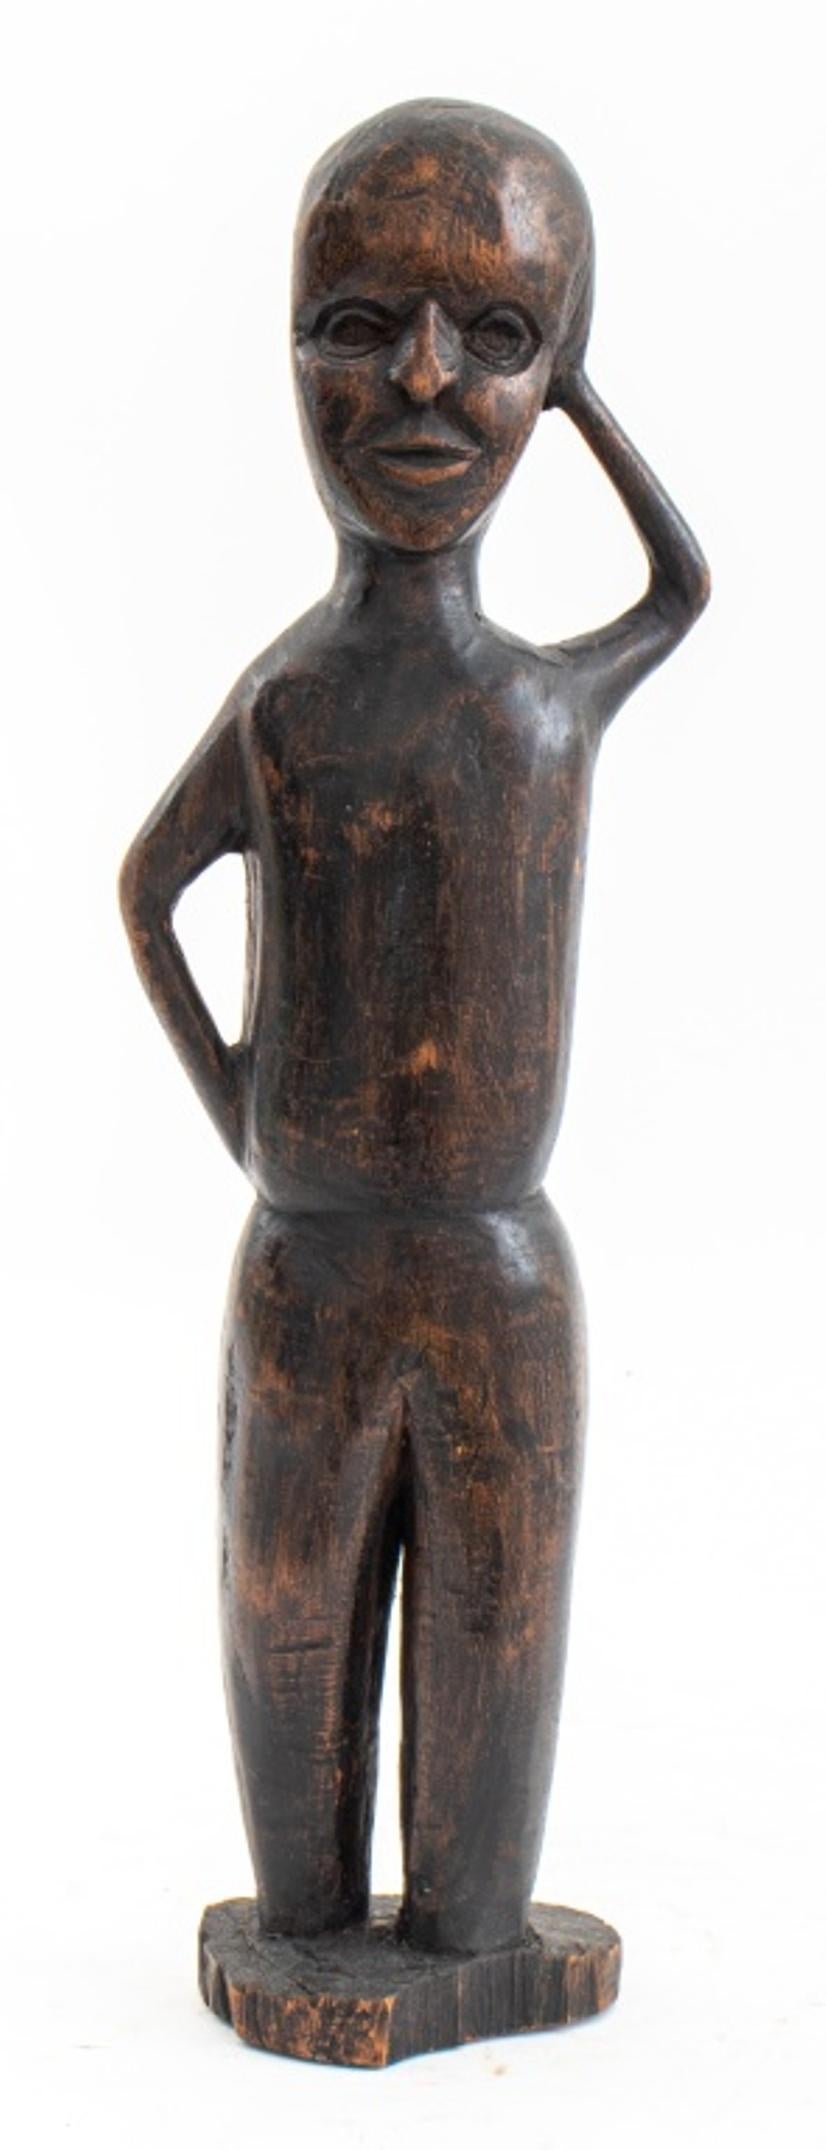 Outsider Art Carved Wooden Figure For Sale